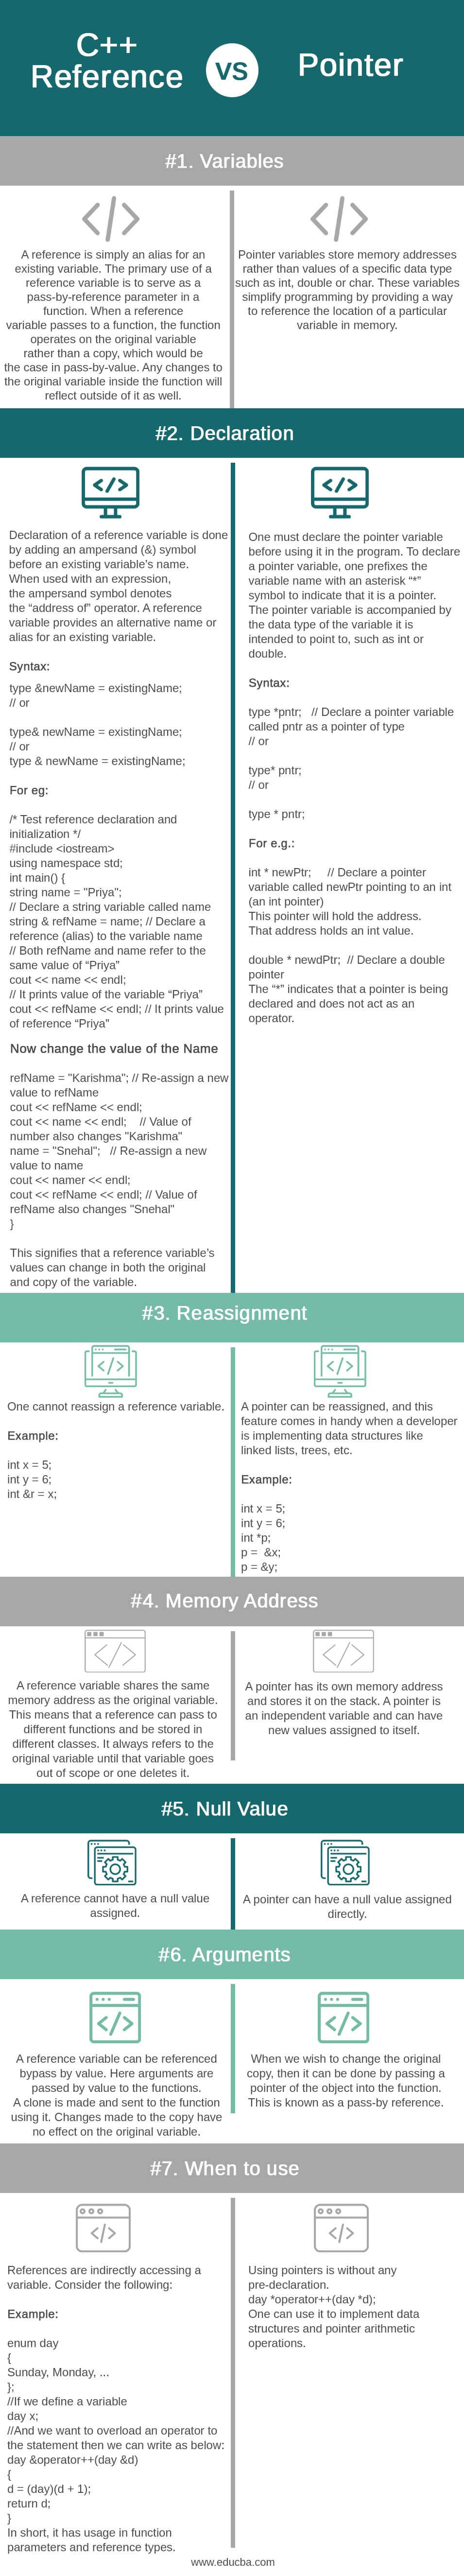 C++-Reference-vs-Pointer-info